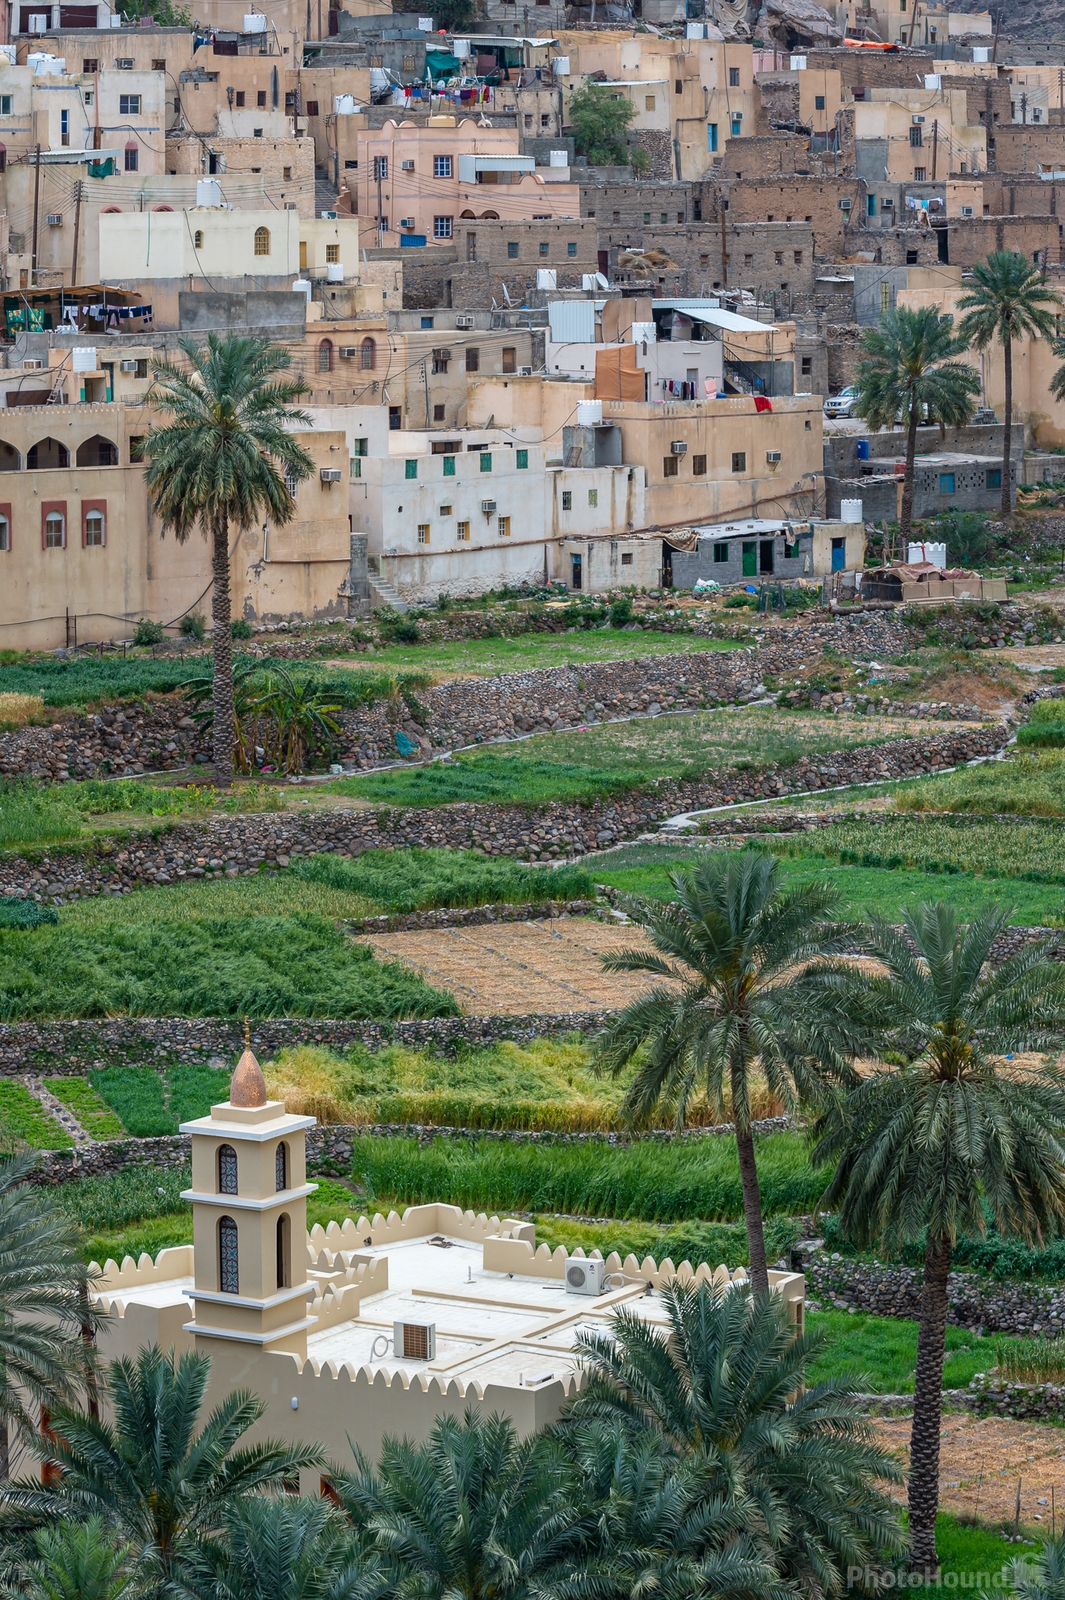 Image of Balad Sayt (بلد سيت) Village by Sue Wolfe